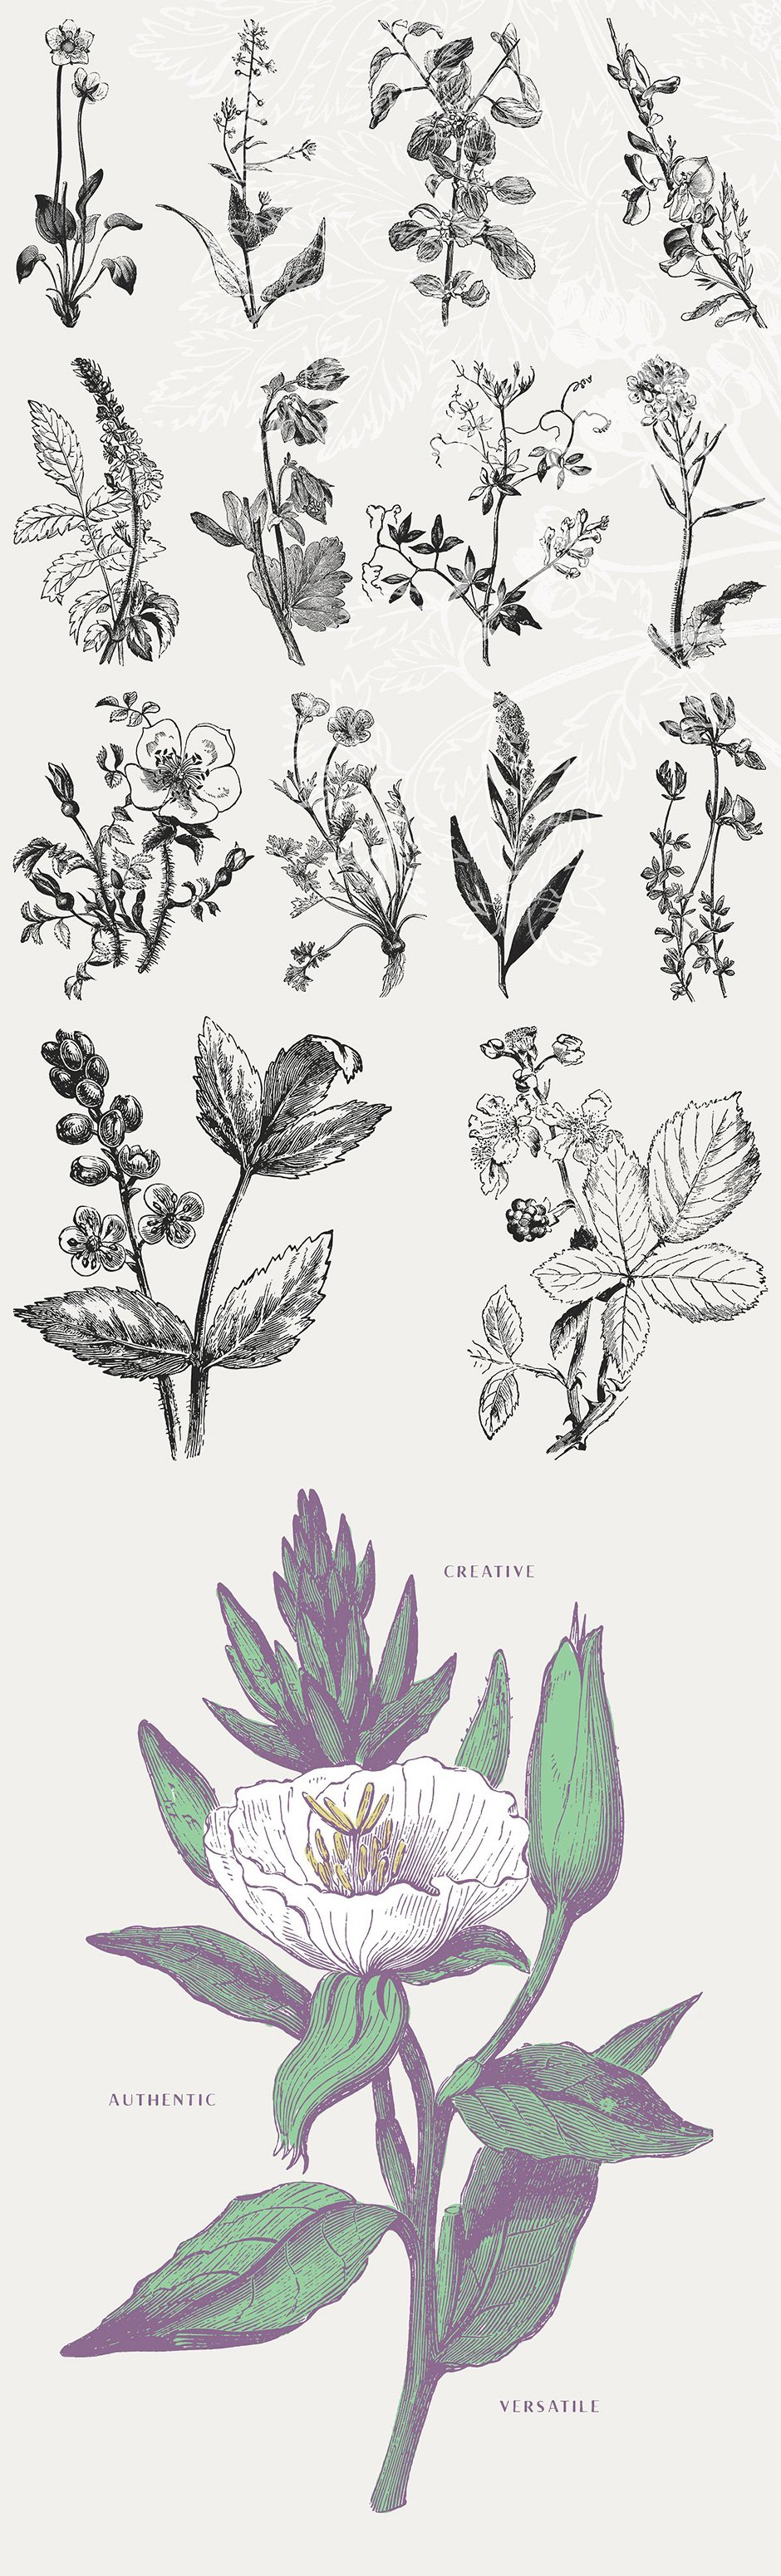 39 Plant & Flower Illustrations No. 3